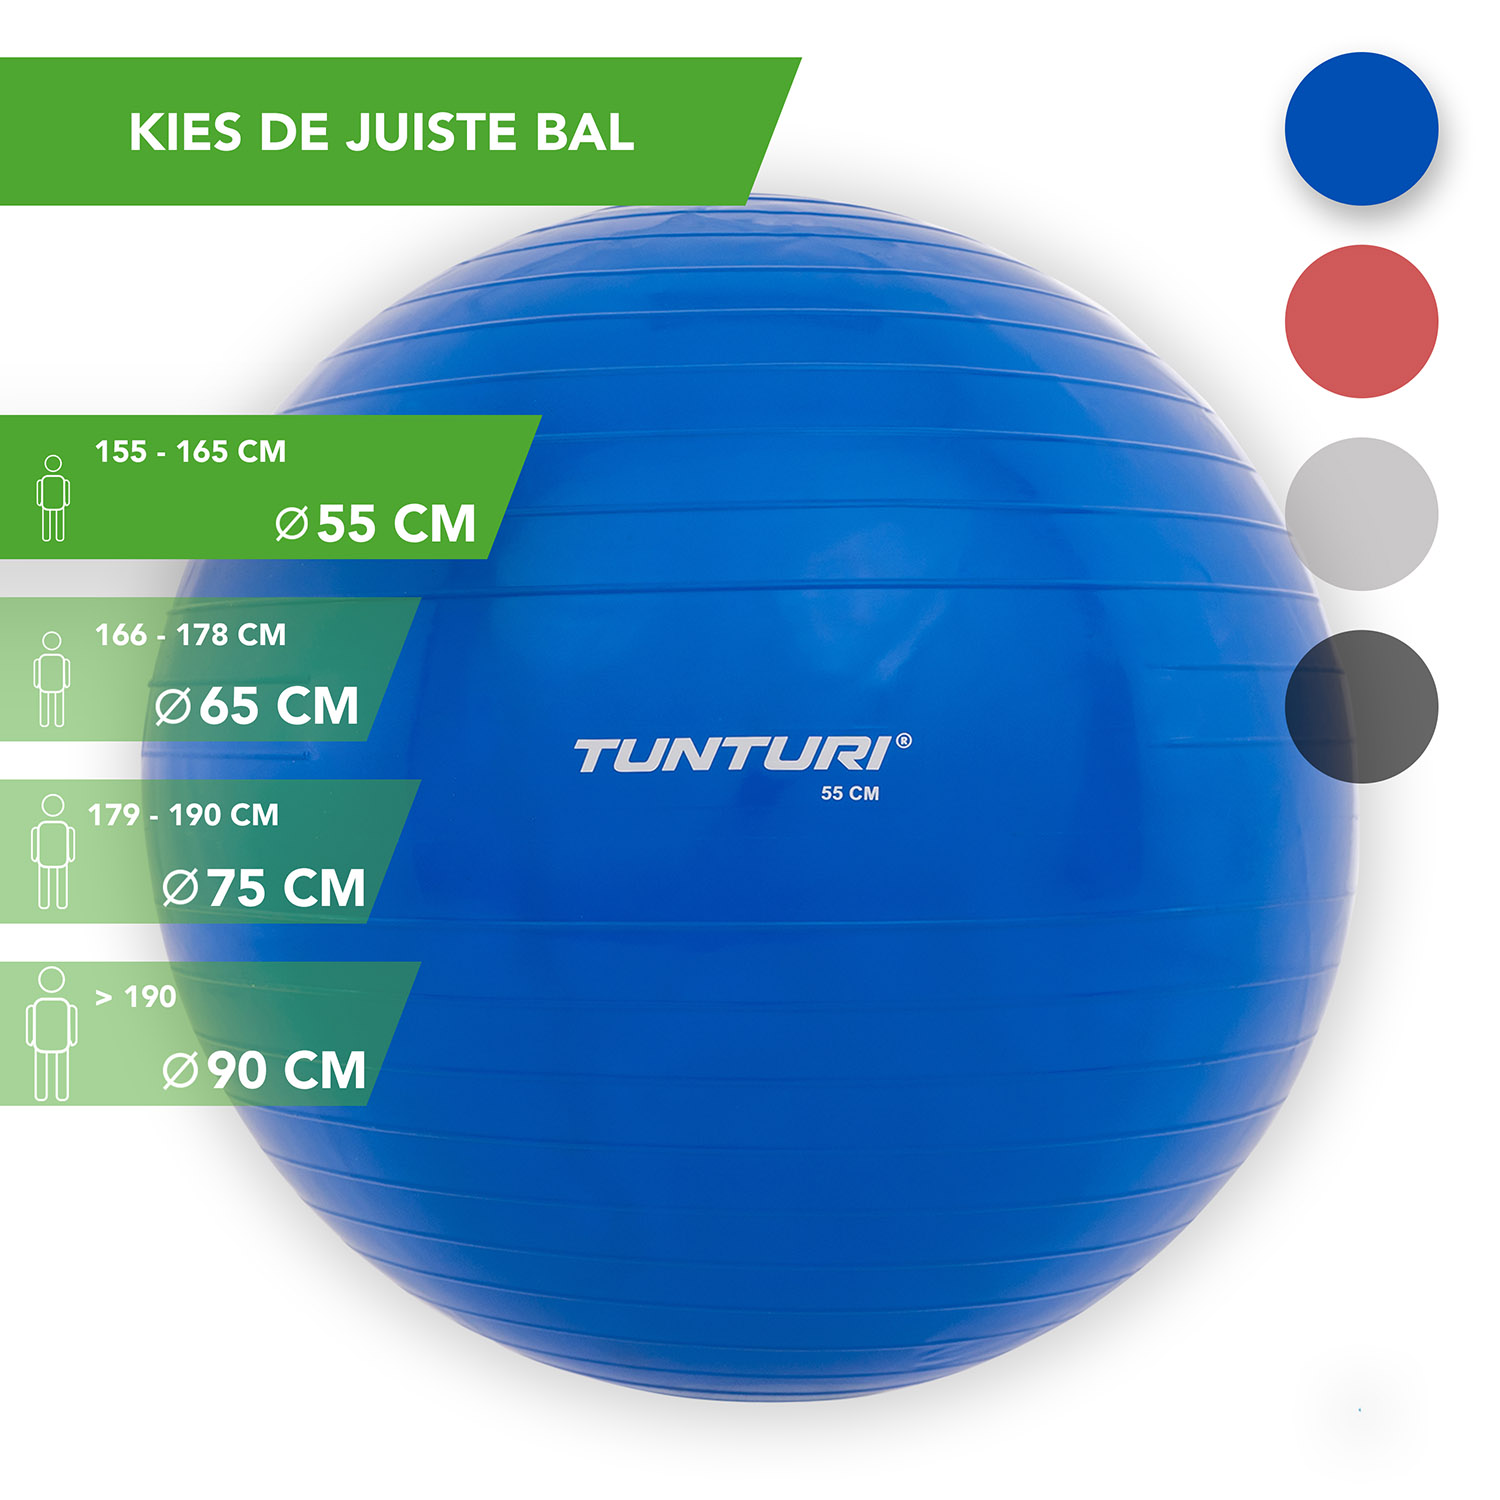 Fitnessbal - Inclusief pomp - Blauw